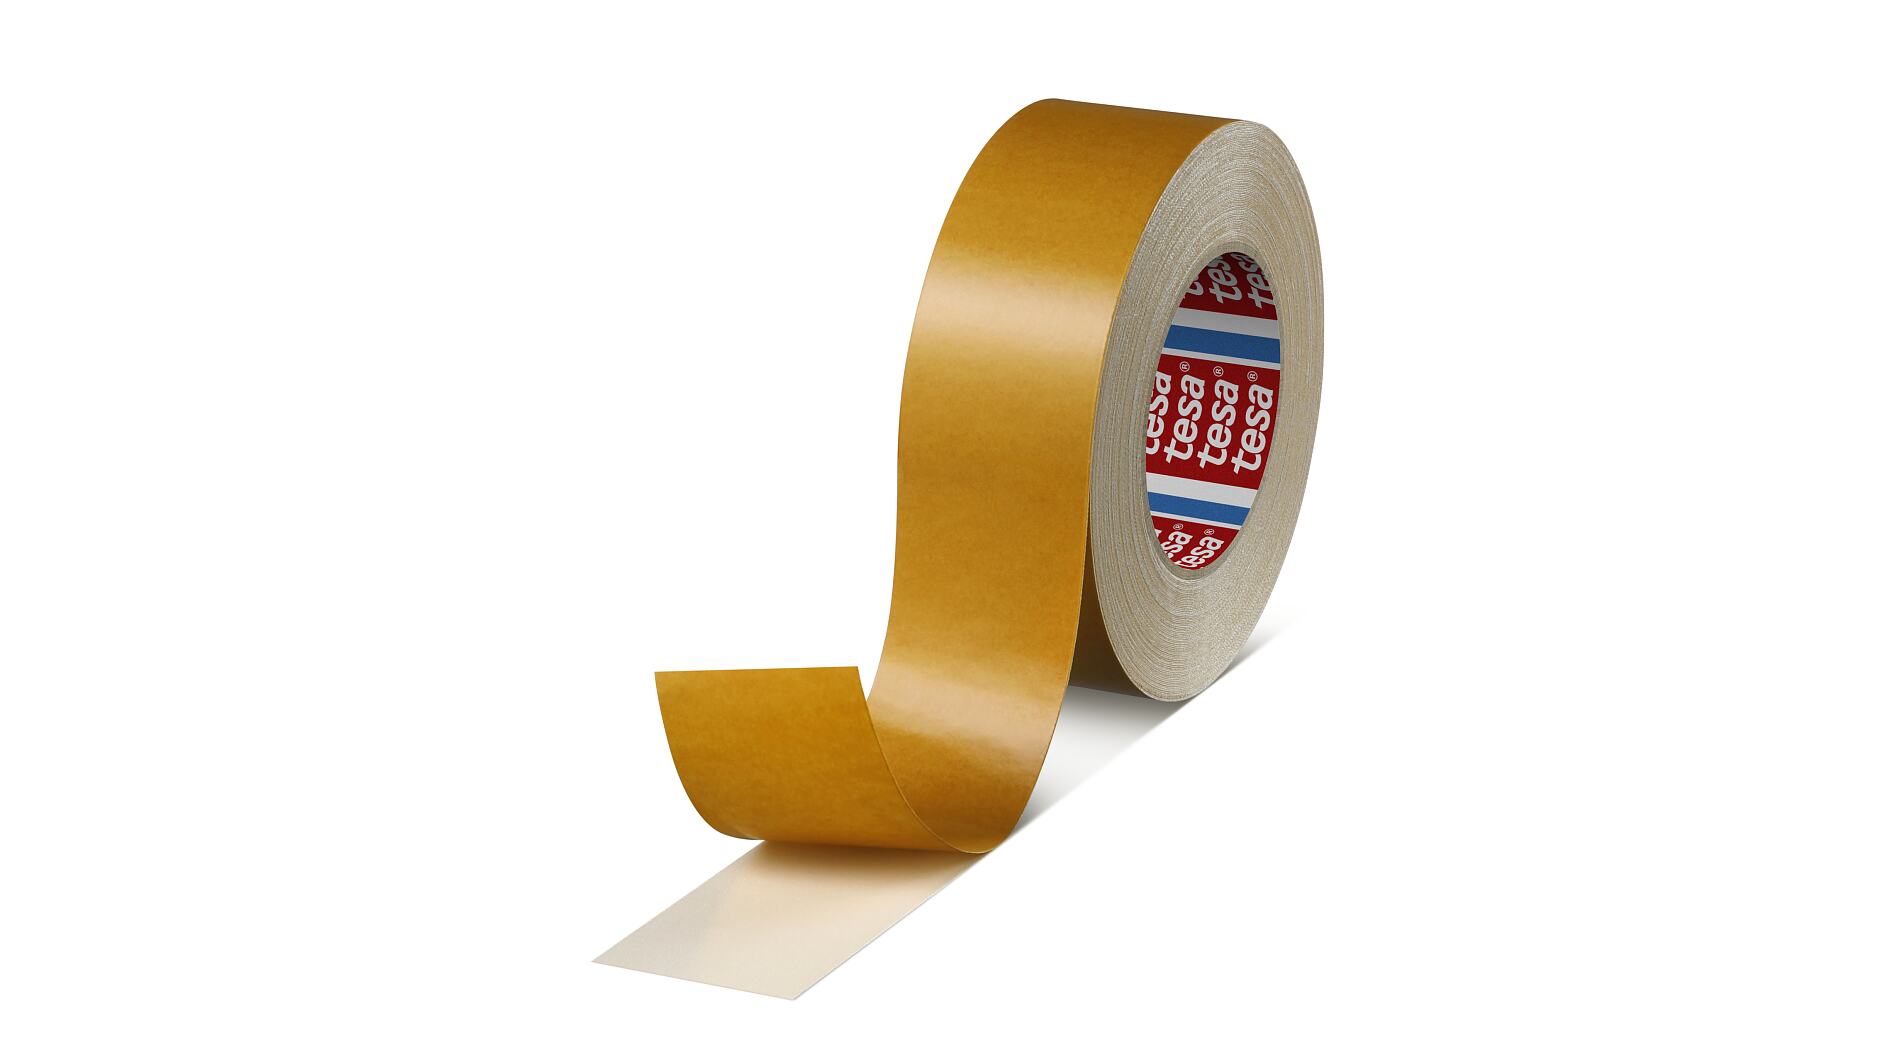 Tesa 4934 Double-Sided Fabric Tape